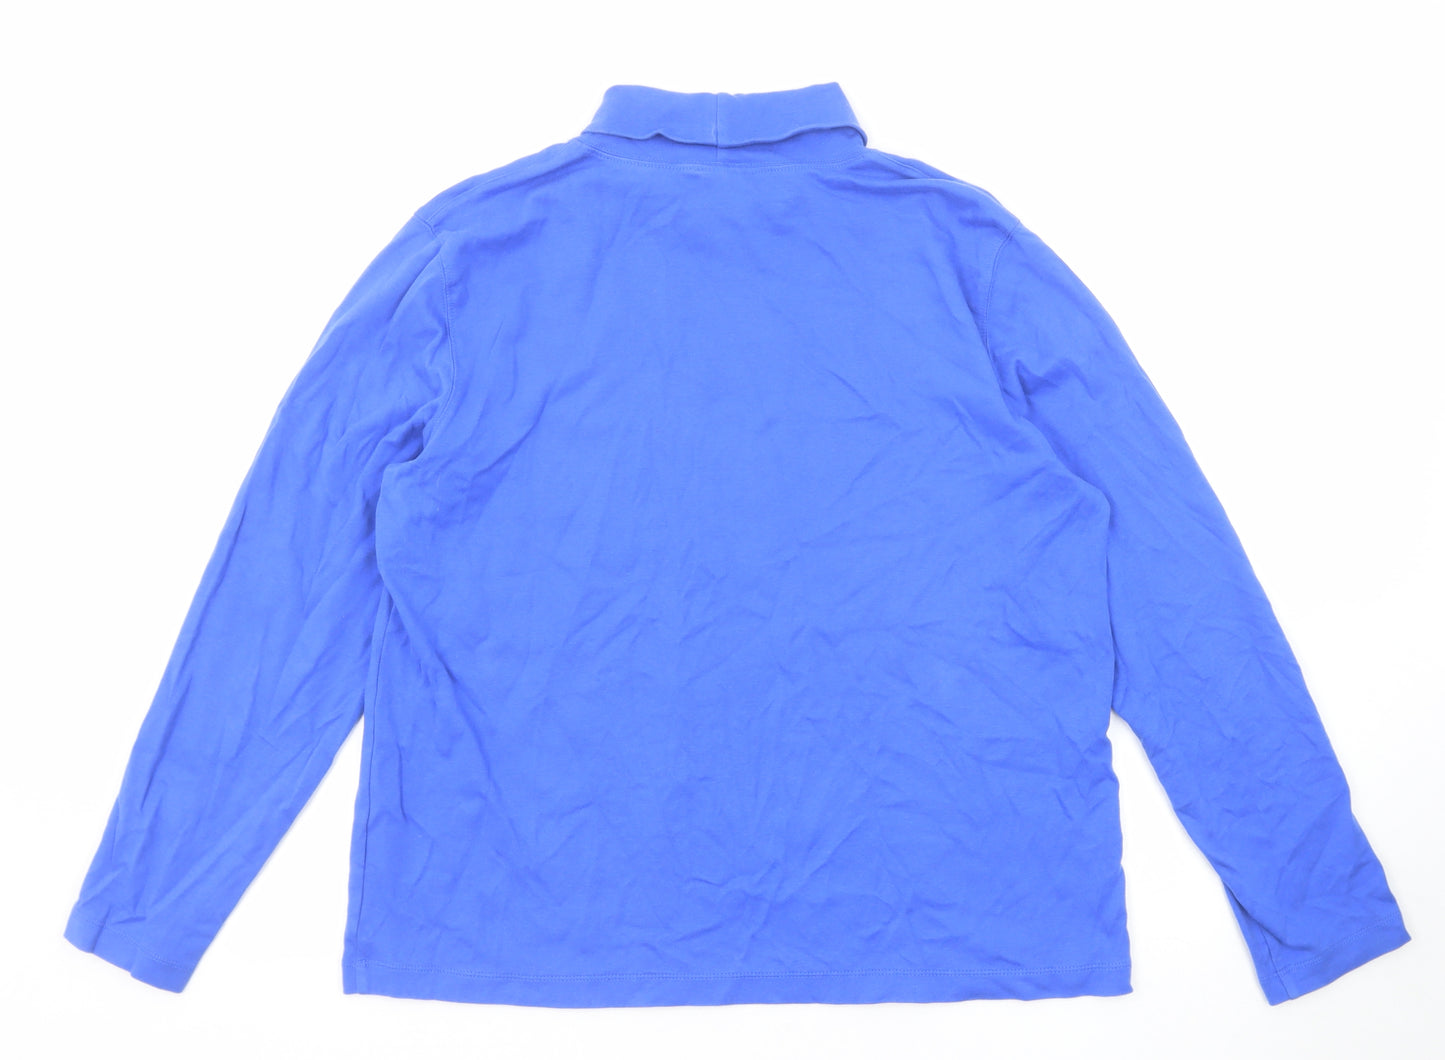 Lands' End Womens Blue Cotton Basic T-Shirt Size 14 Round Neck - Size 14-16